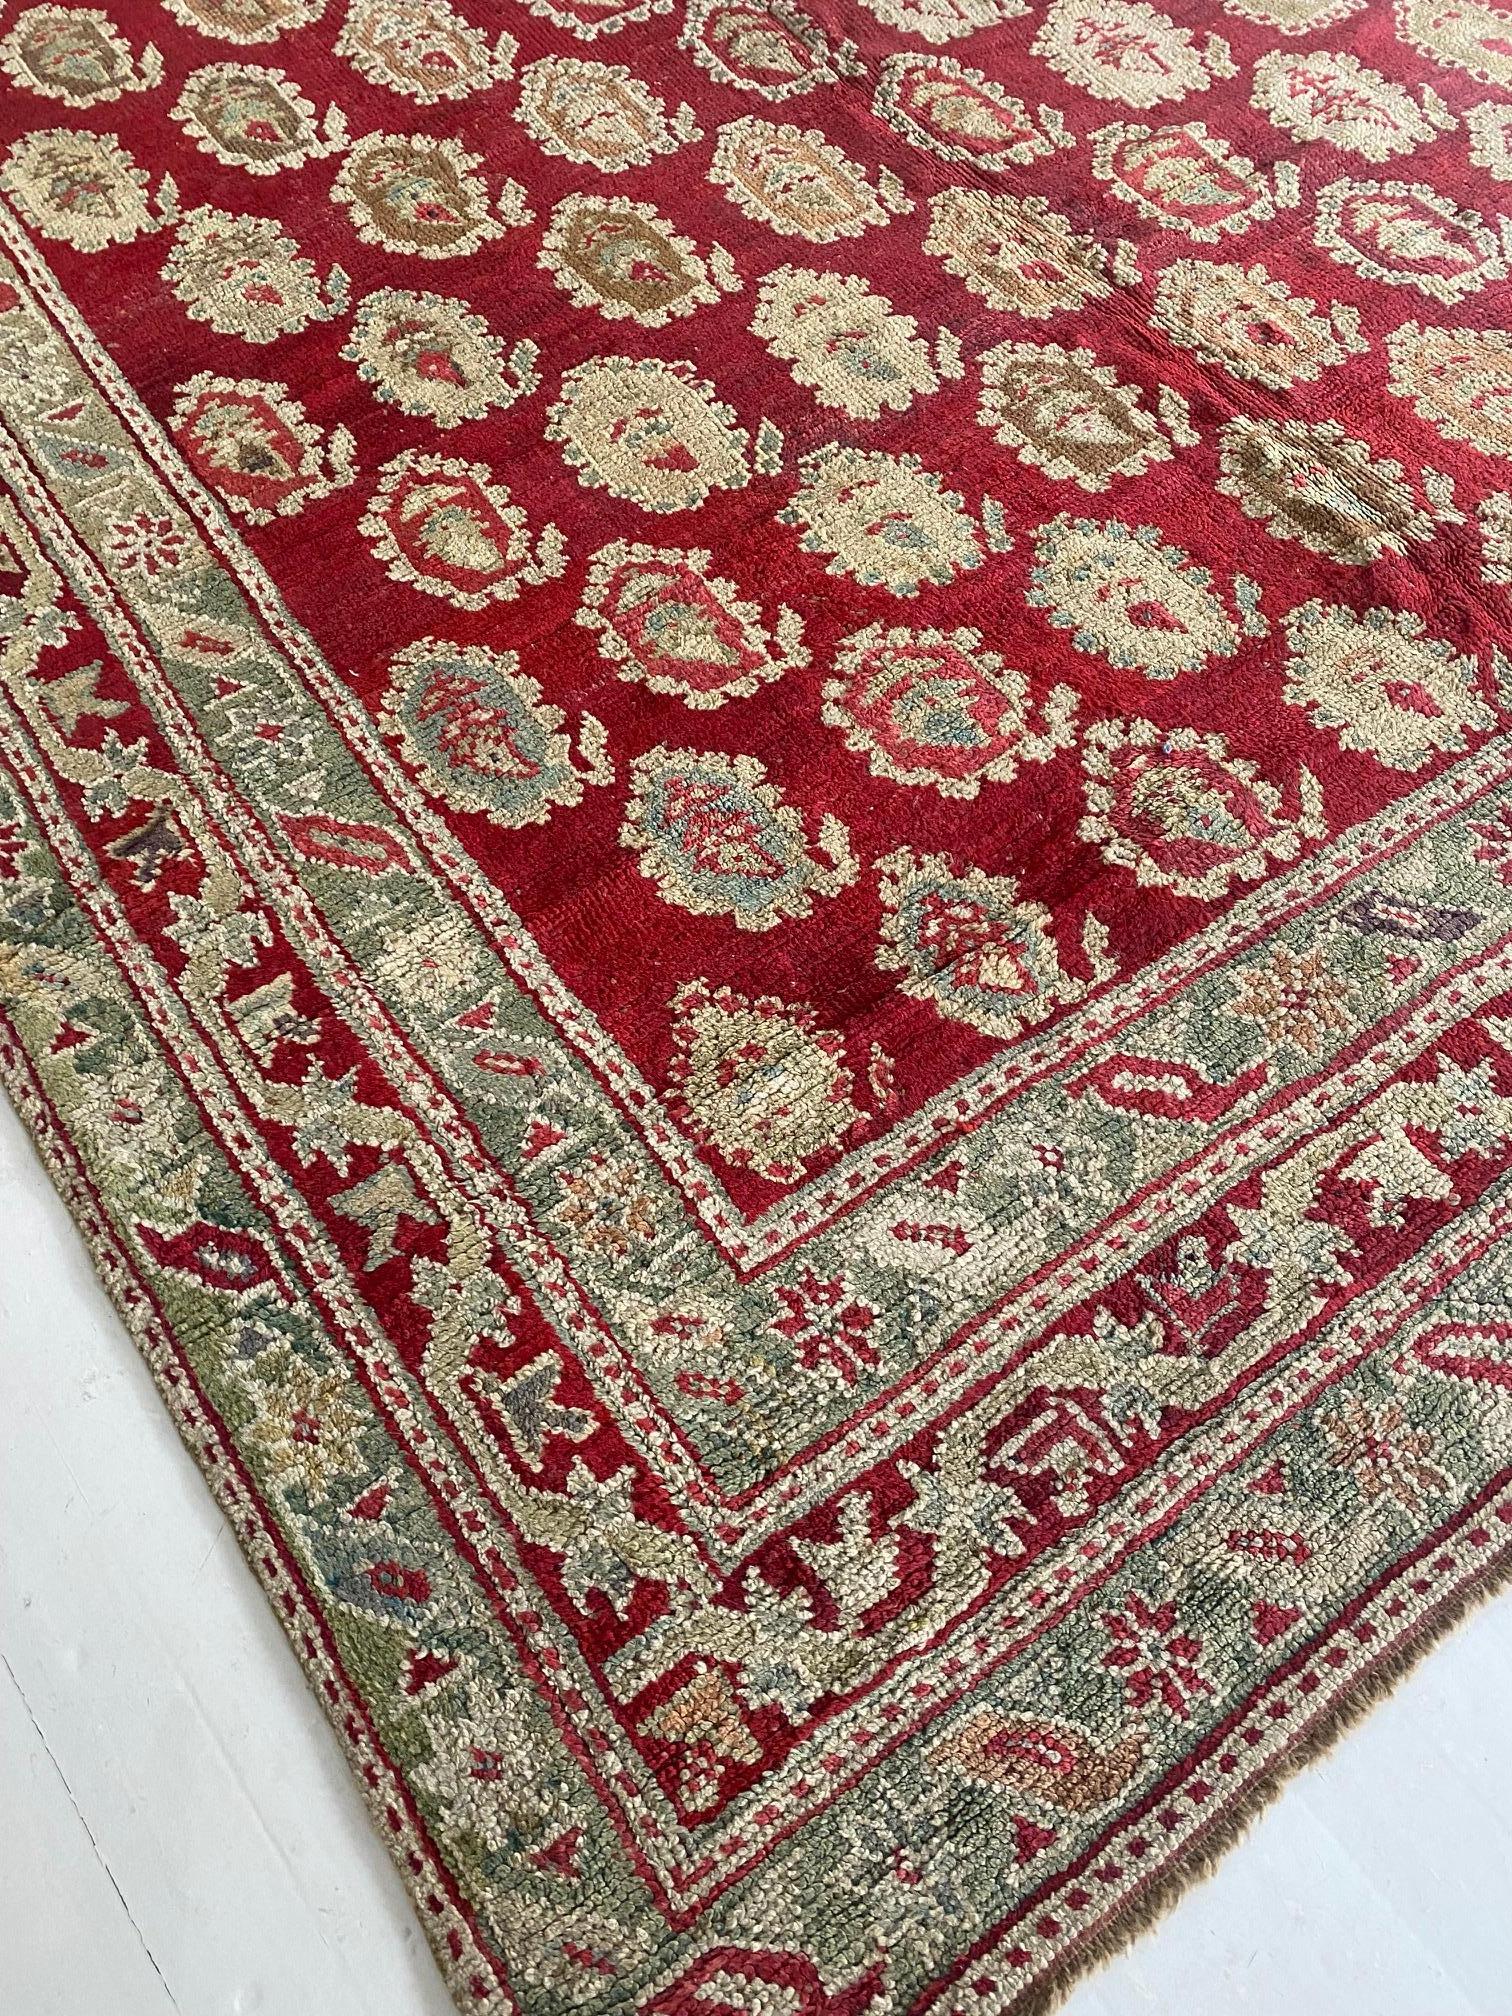 19th Century Turkish Oushak Red Wool Carpet For Sale 2